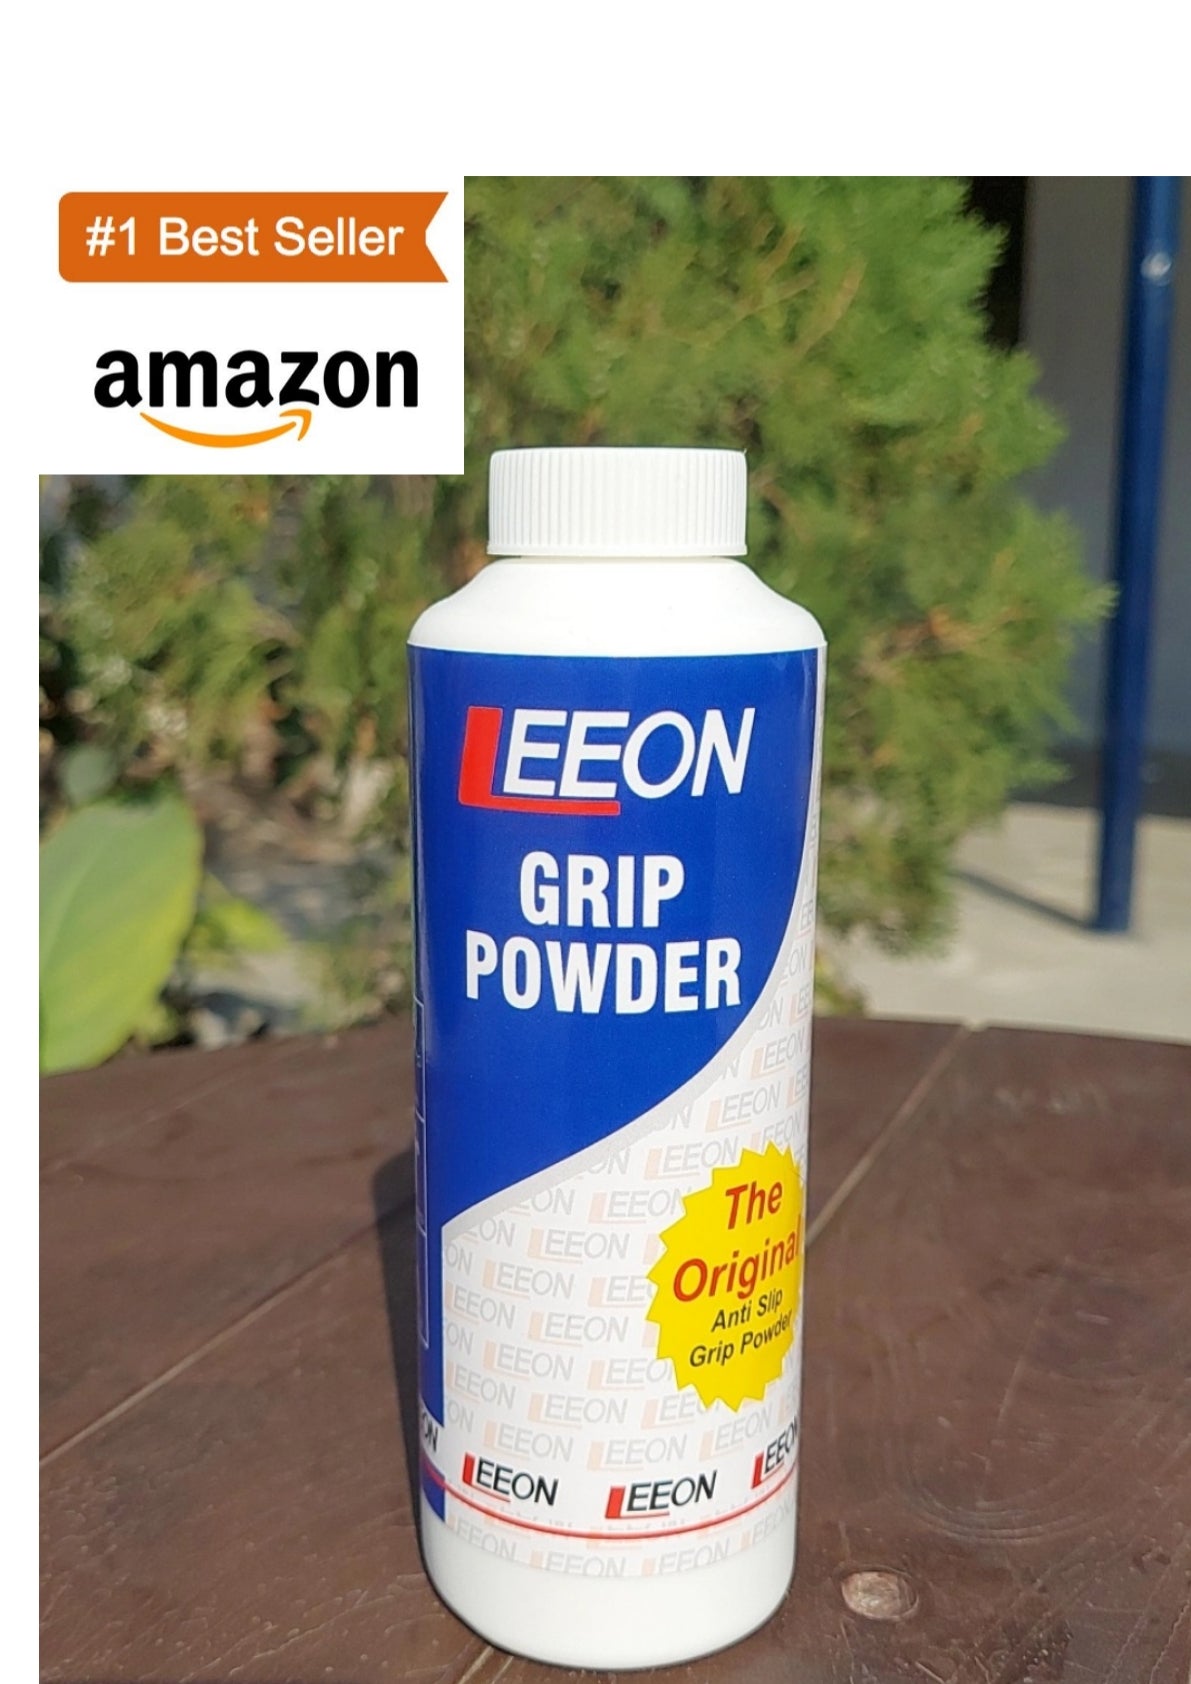 LeeOn Grip Powder